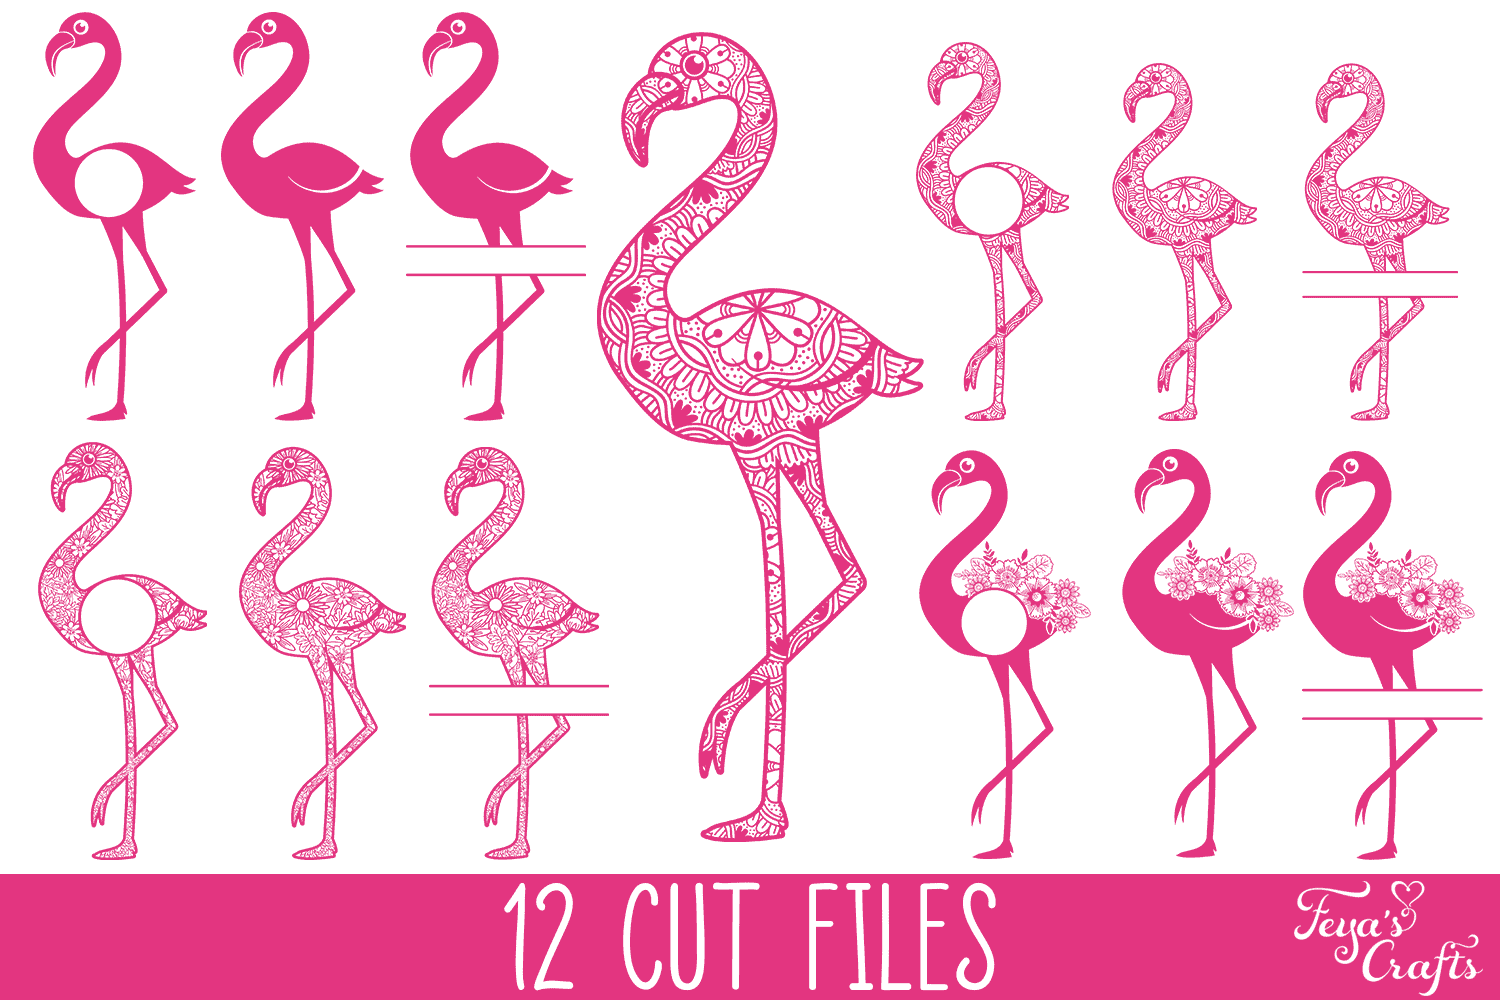 Feya’s All Shop Craft Bundle: 750+ SVG Cut Files & 57 Fonts - Only $19! 63